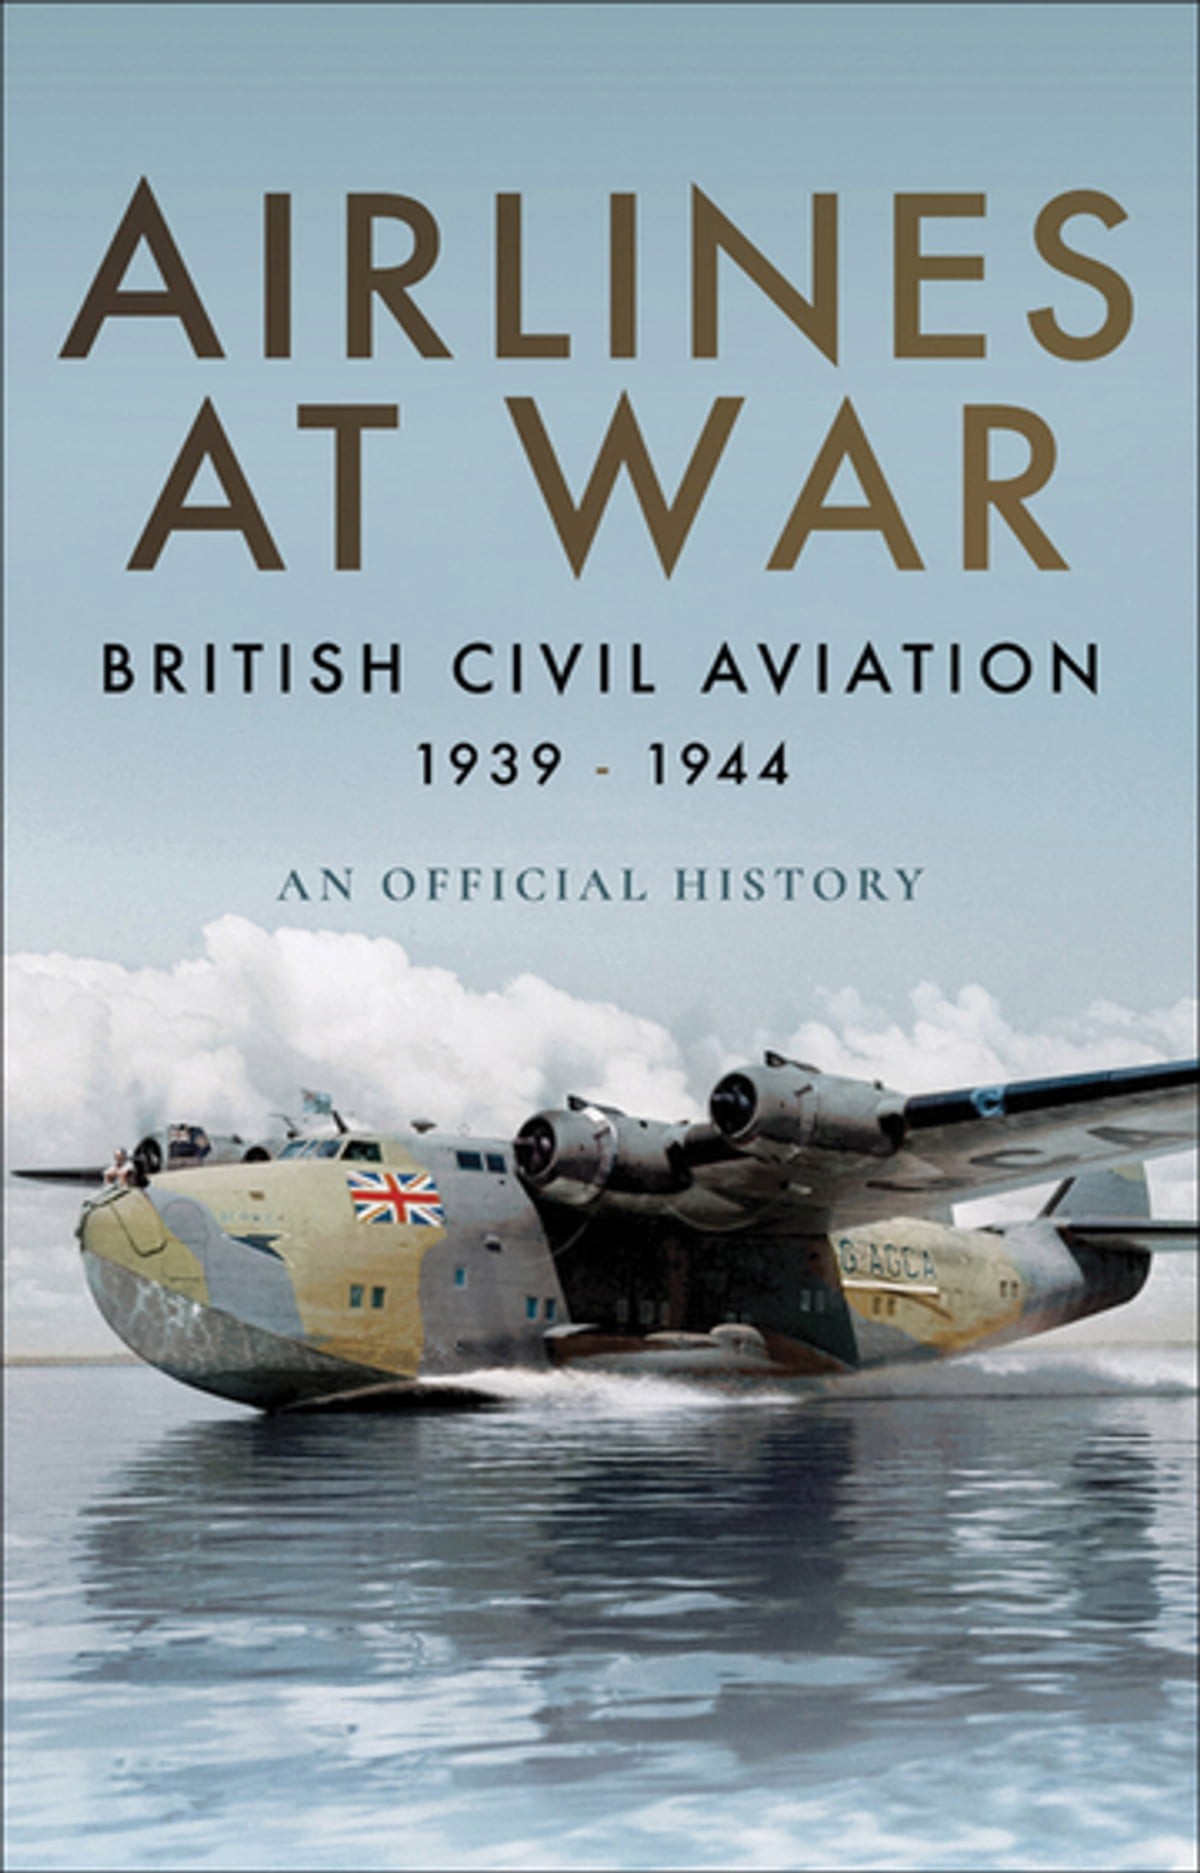 Airlines at War: British Civil Aviation 1939-1944